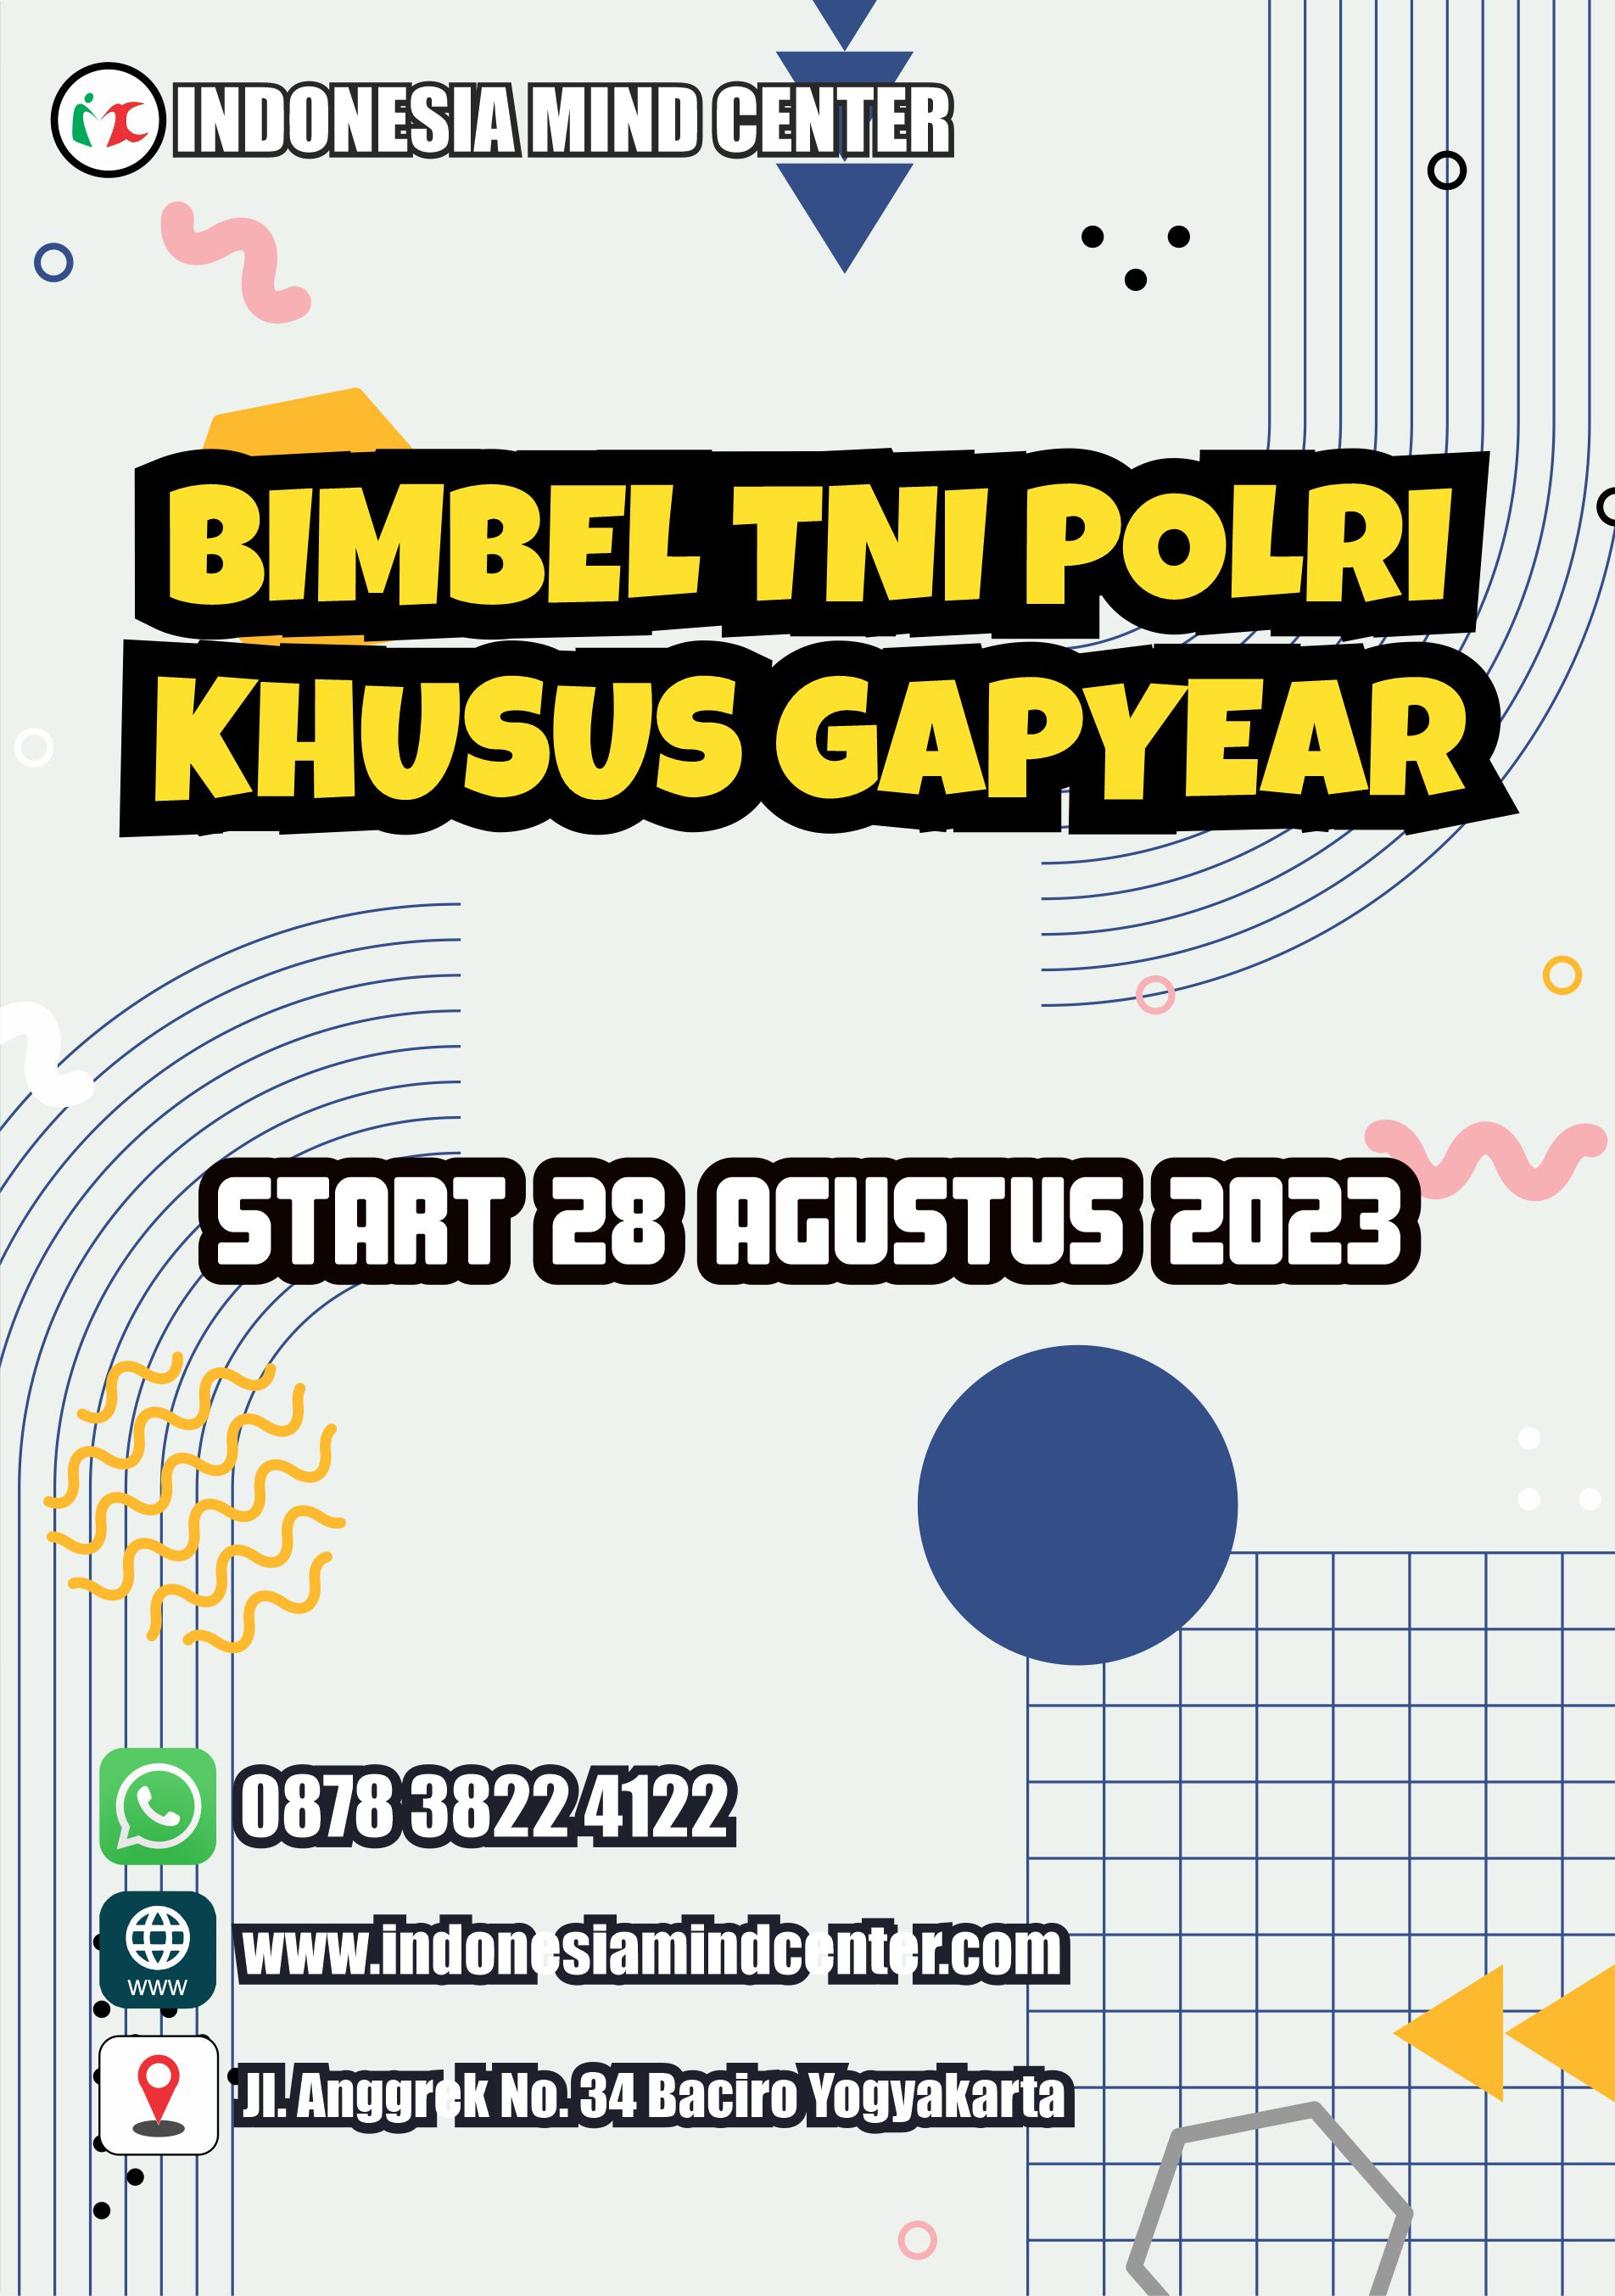 BIMBEL TNI POLRI KHUSUS GAPYEAR START 28 AGUSTUS 2023